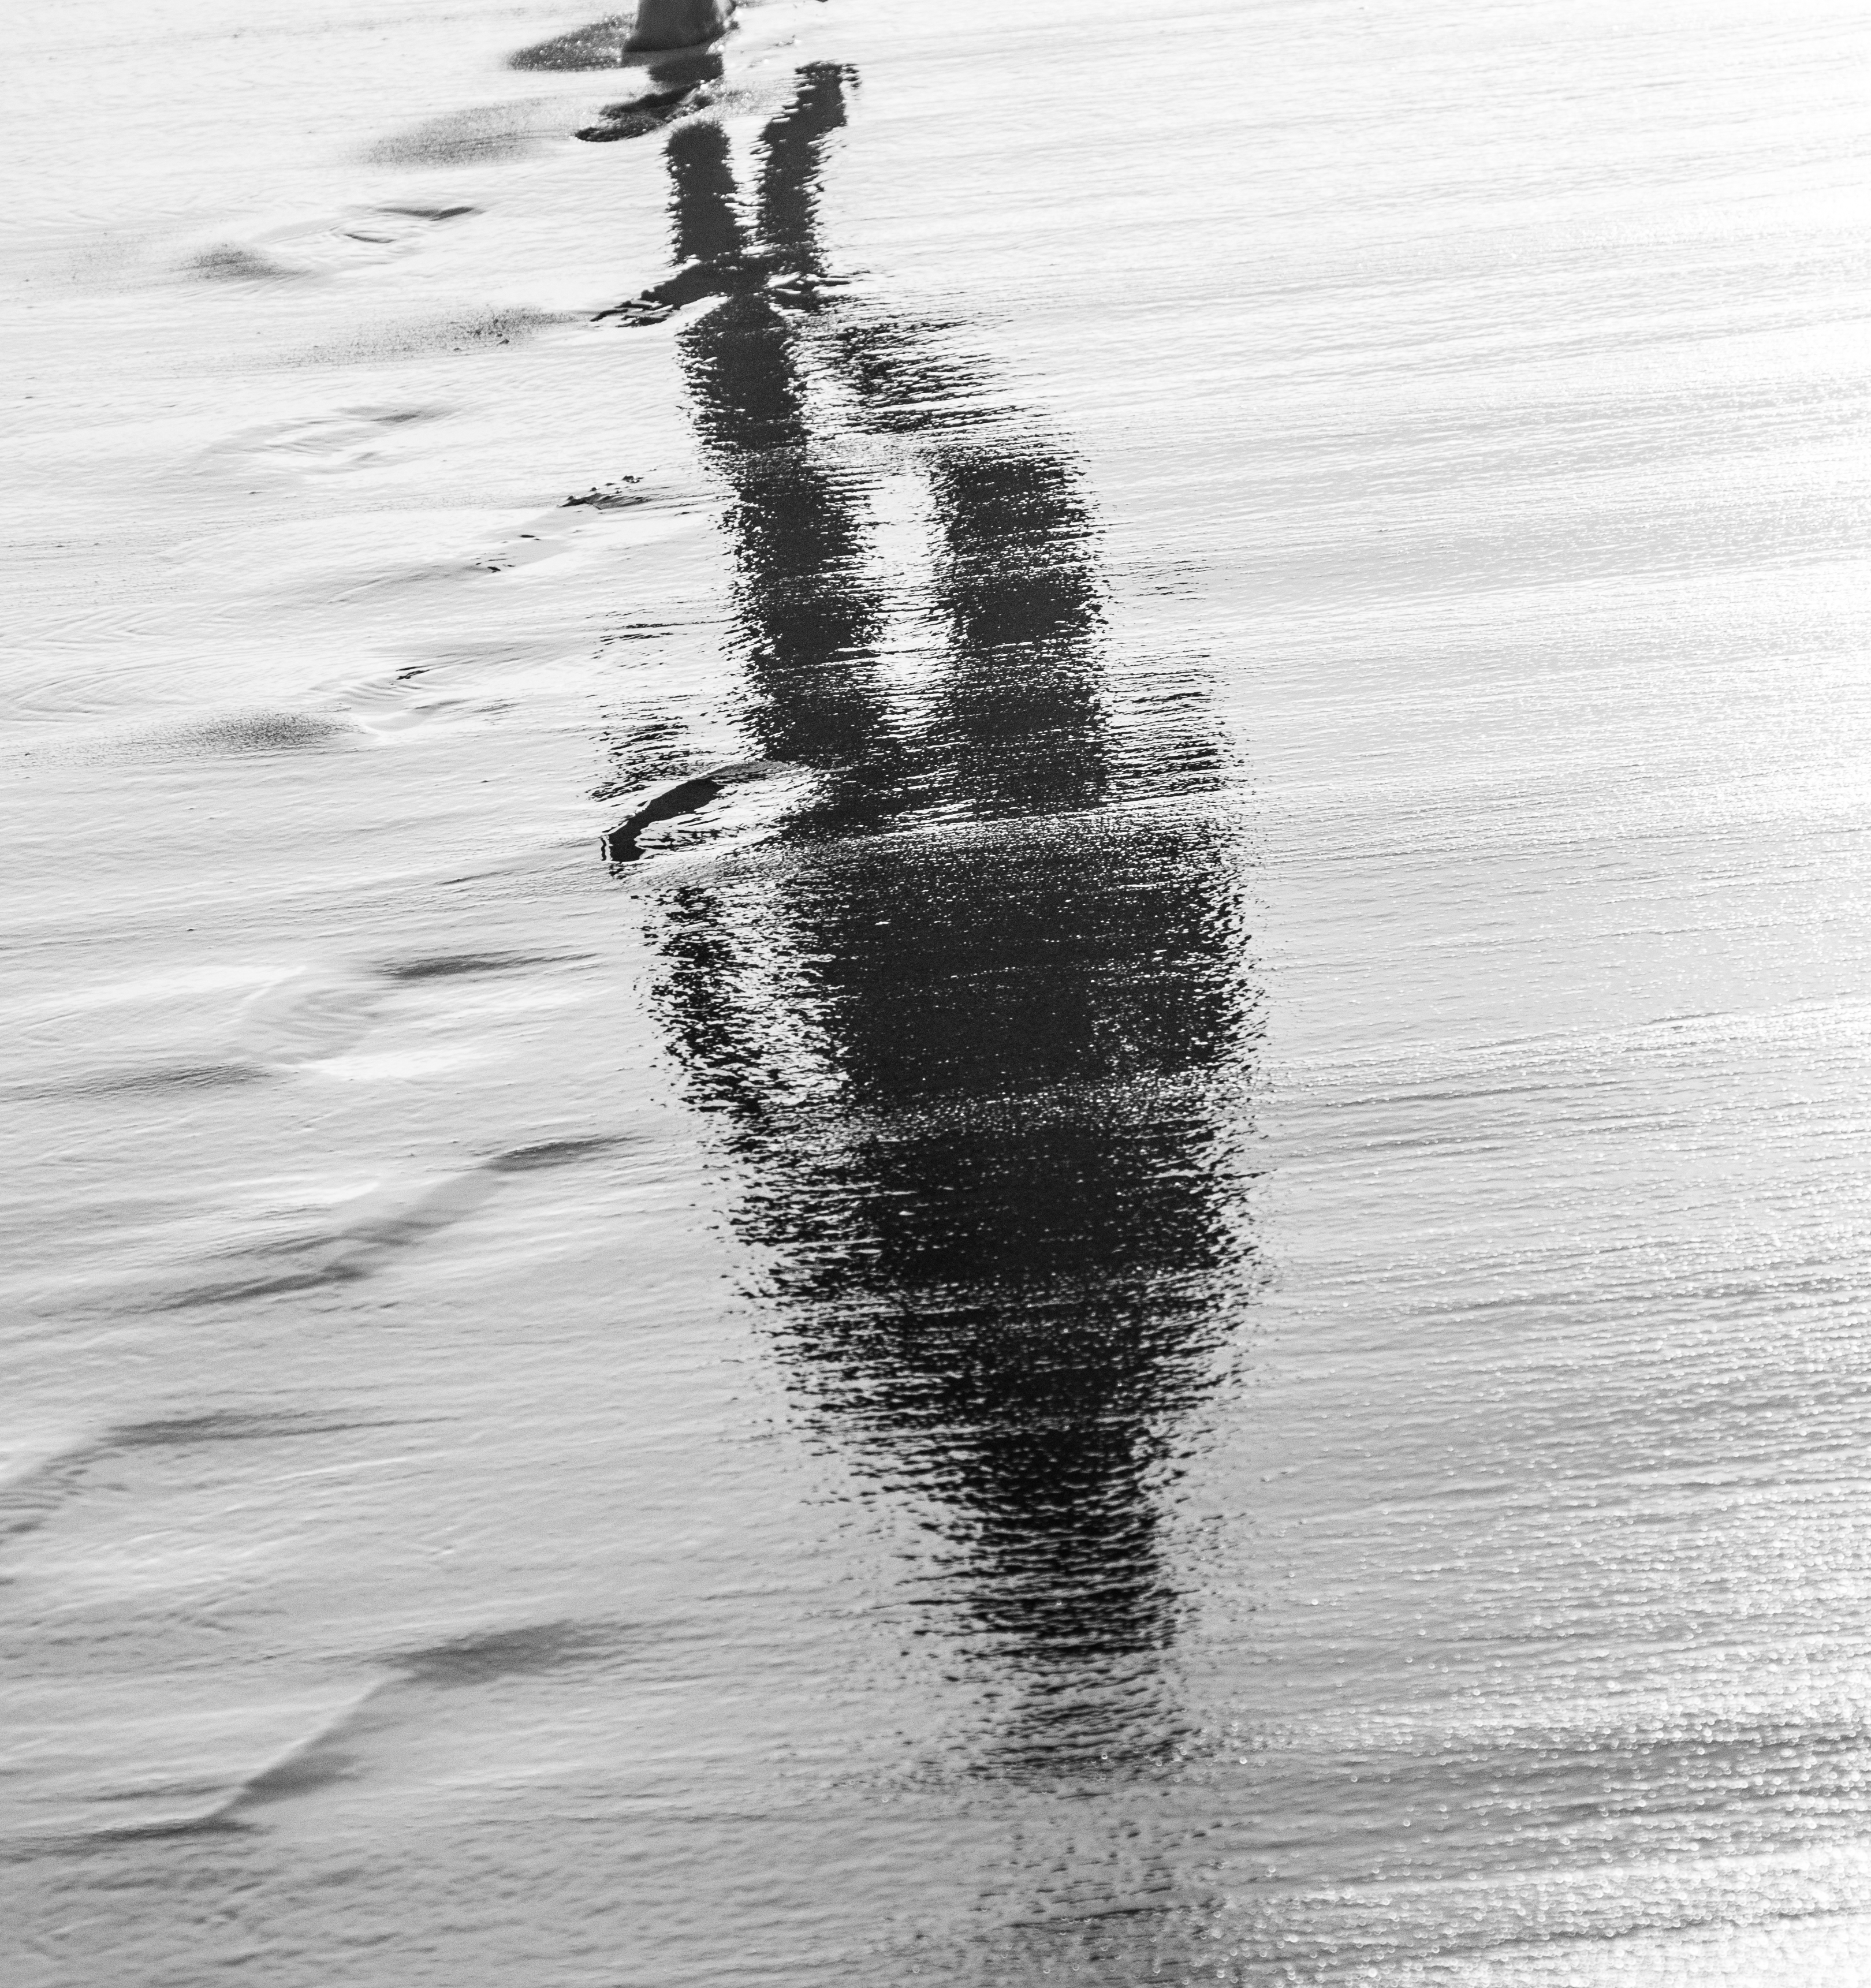 File:Walking reflection.jpg - Wikimedia Commons